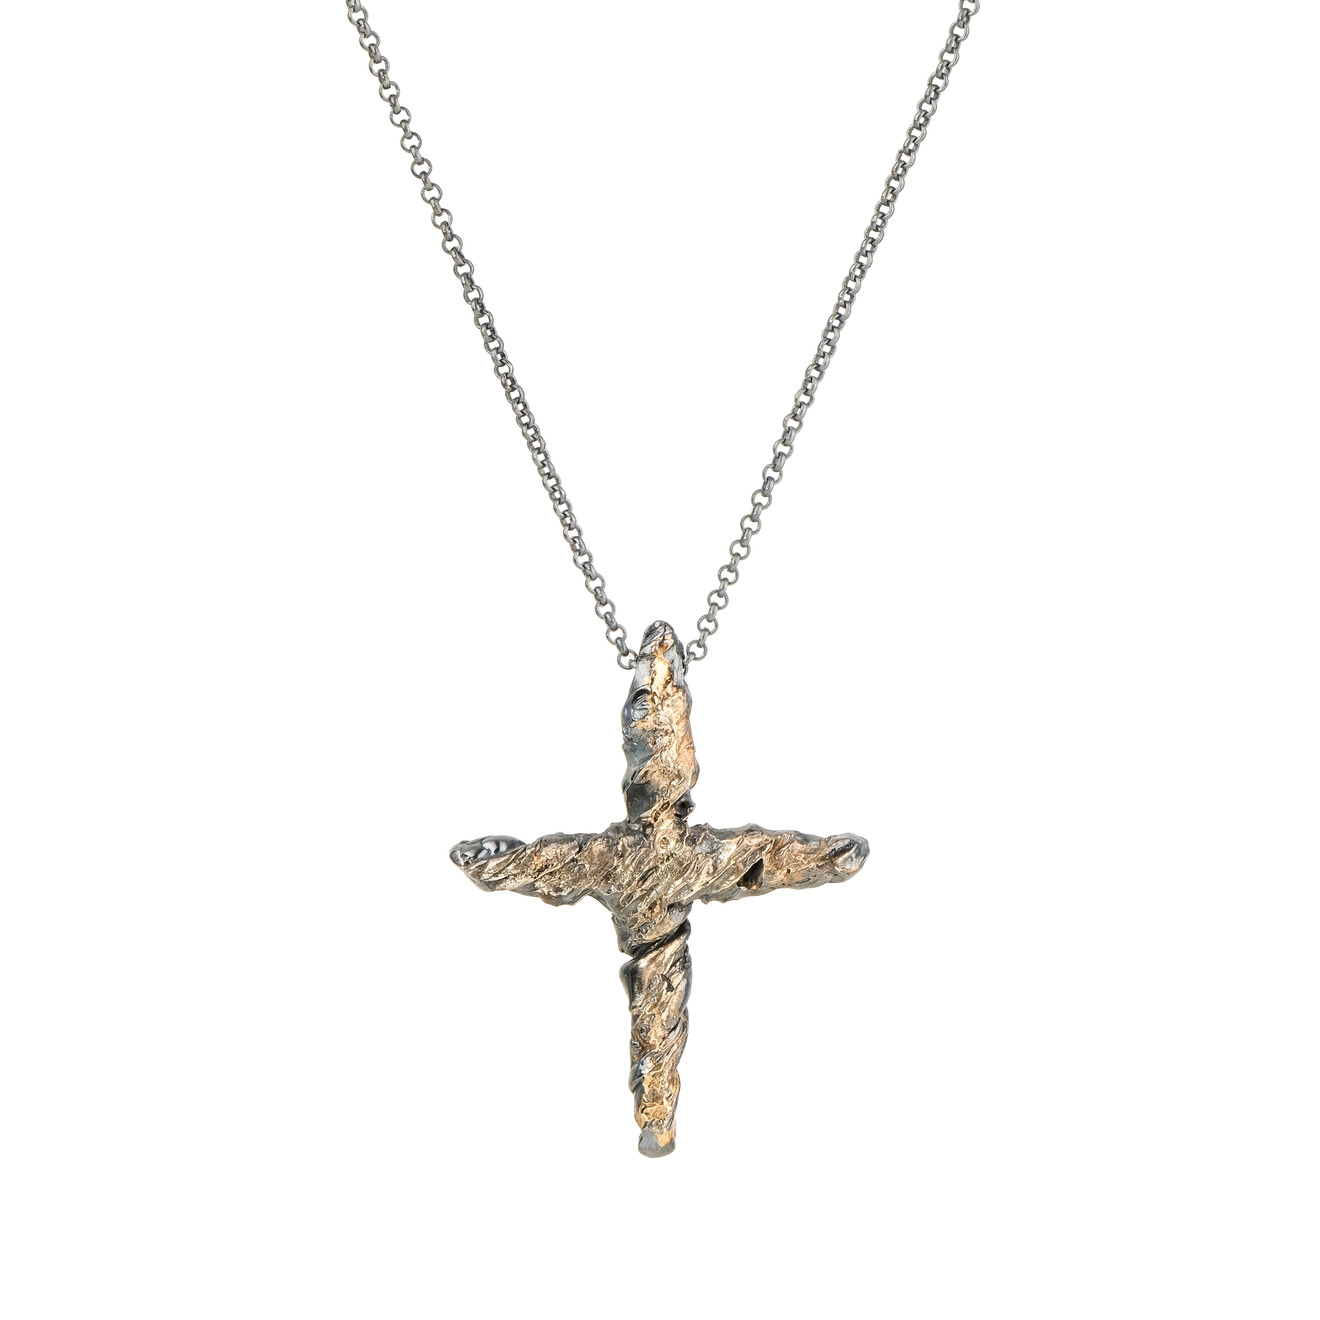 Kintsugi Jewelry Кулон Cross из серебра с позолотой